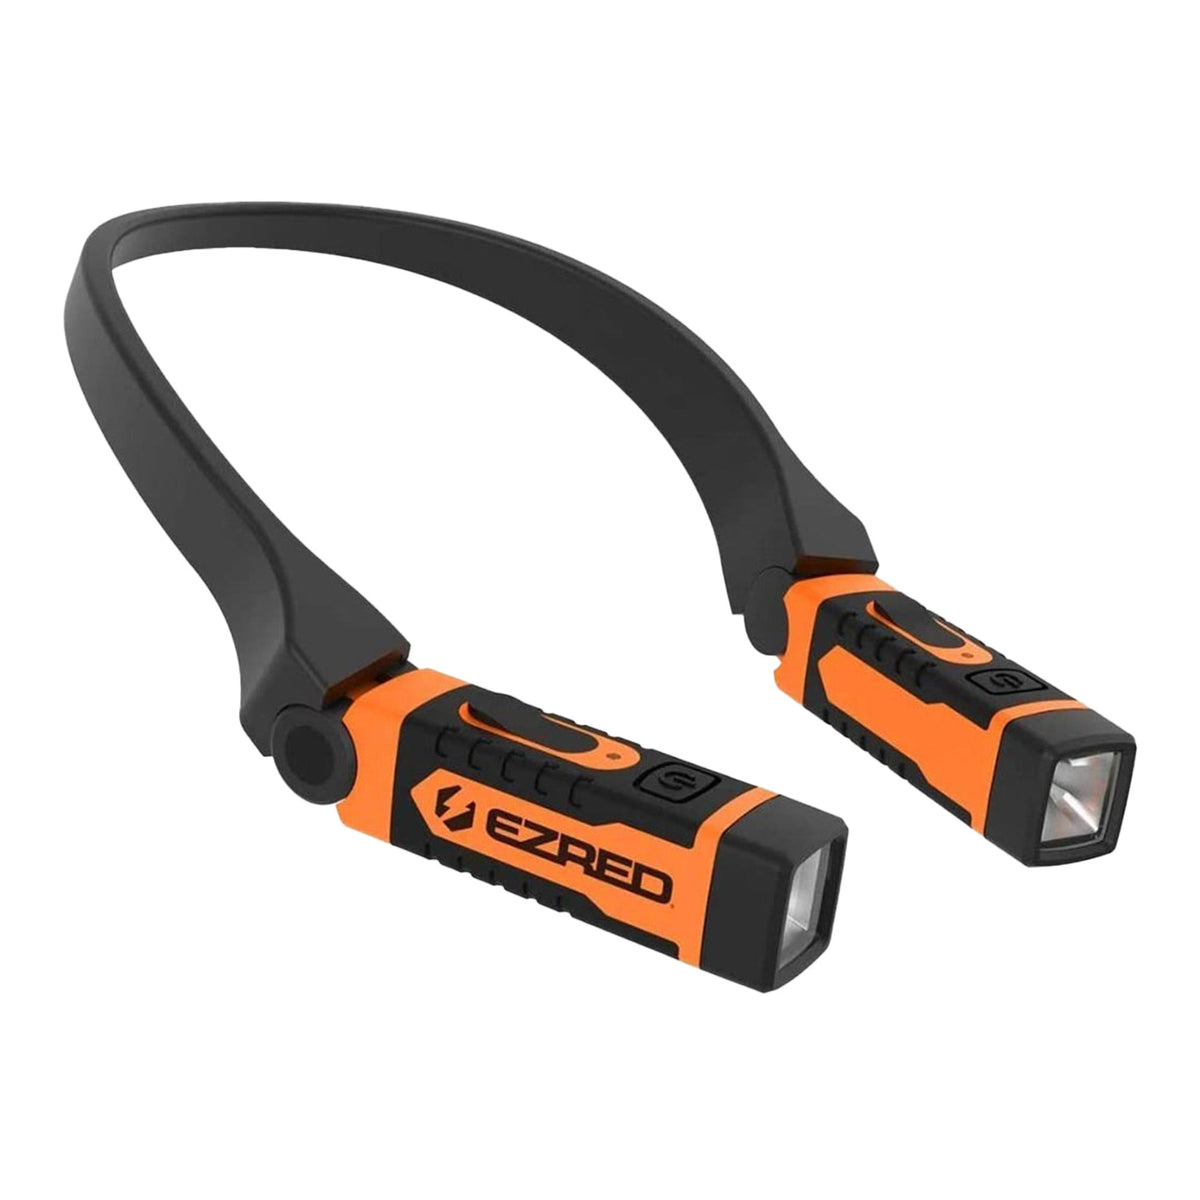 ANYWEAR Neck Light - Orange - USB Rechargeable